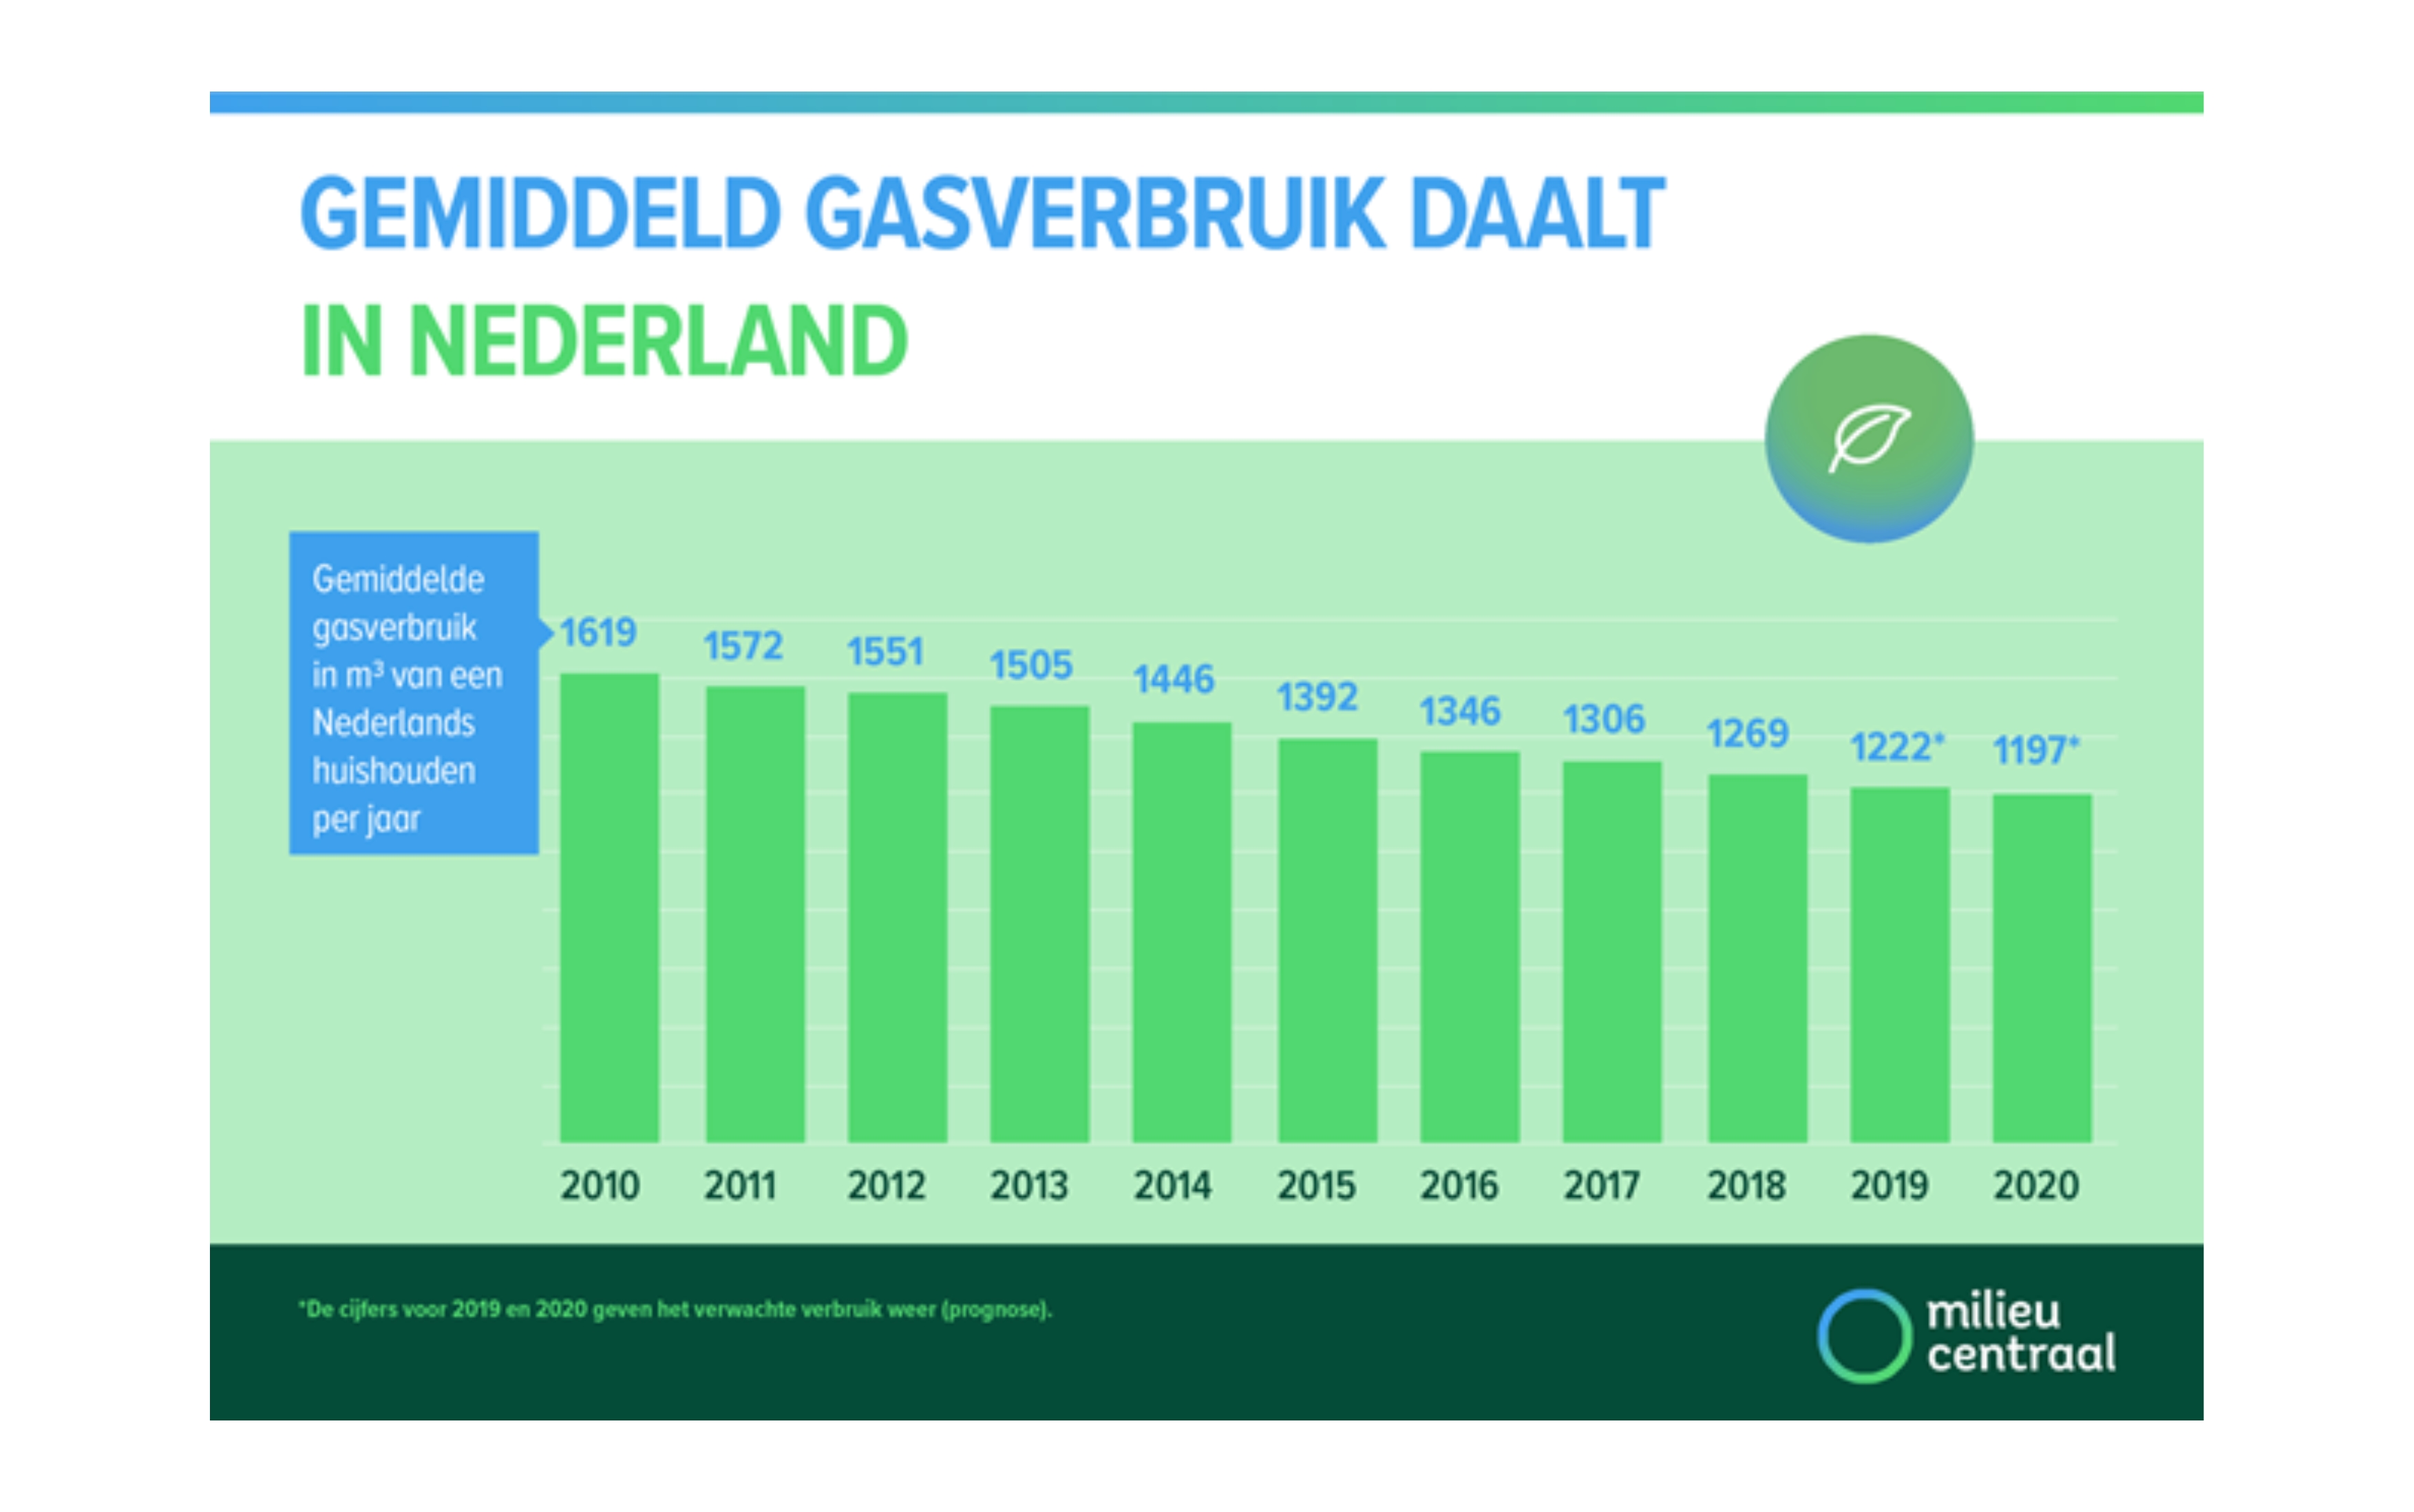 Gemiddeld gas verbruik in Nederland